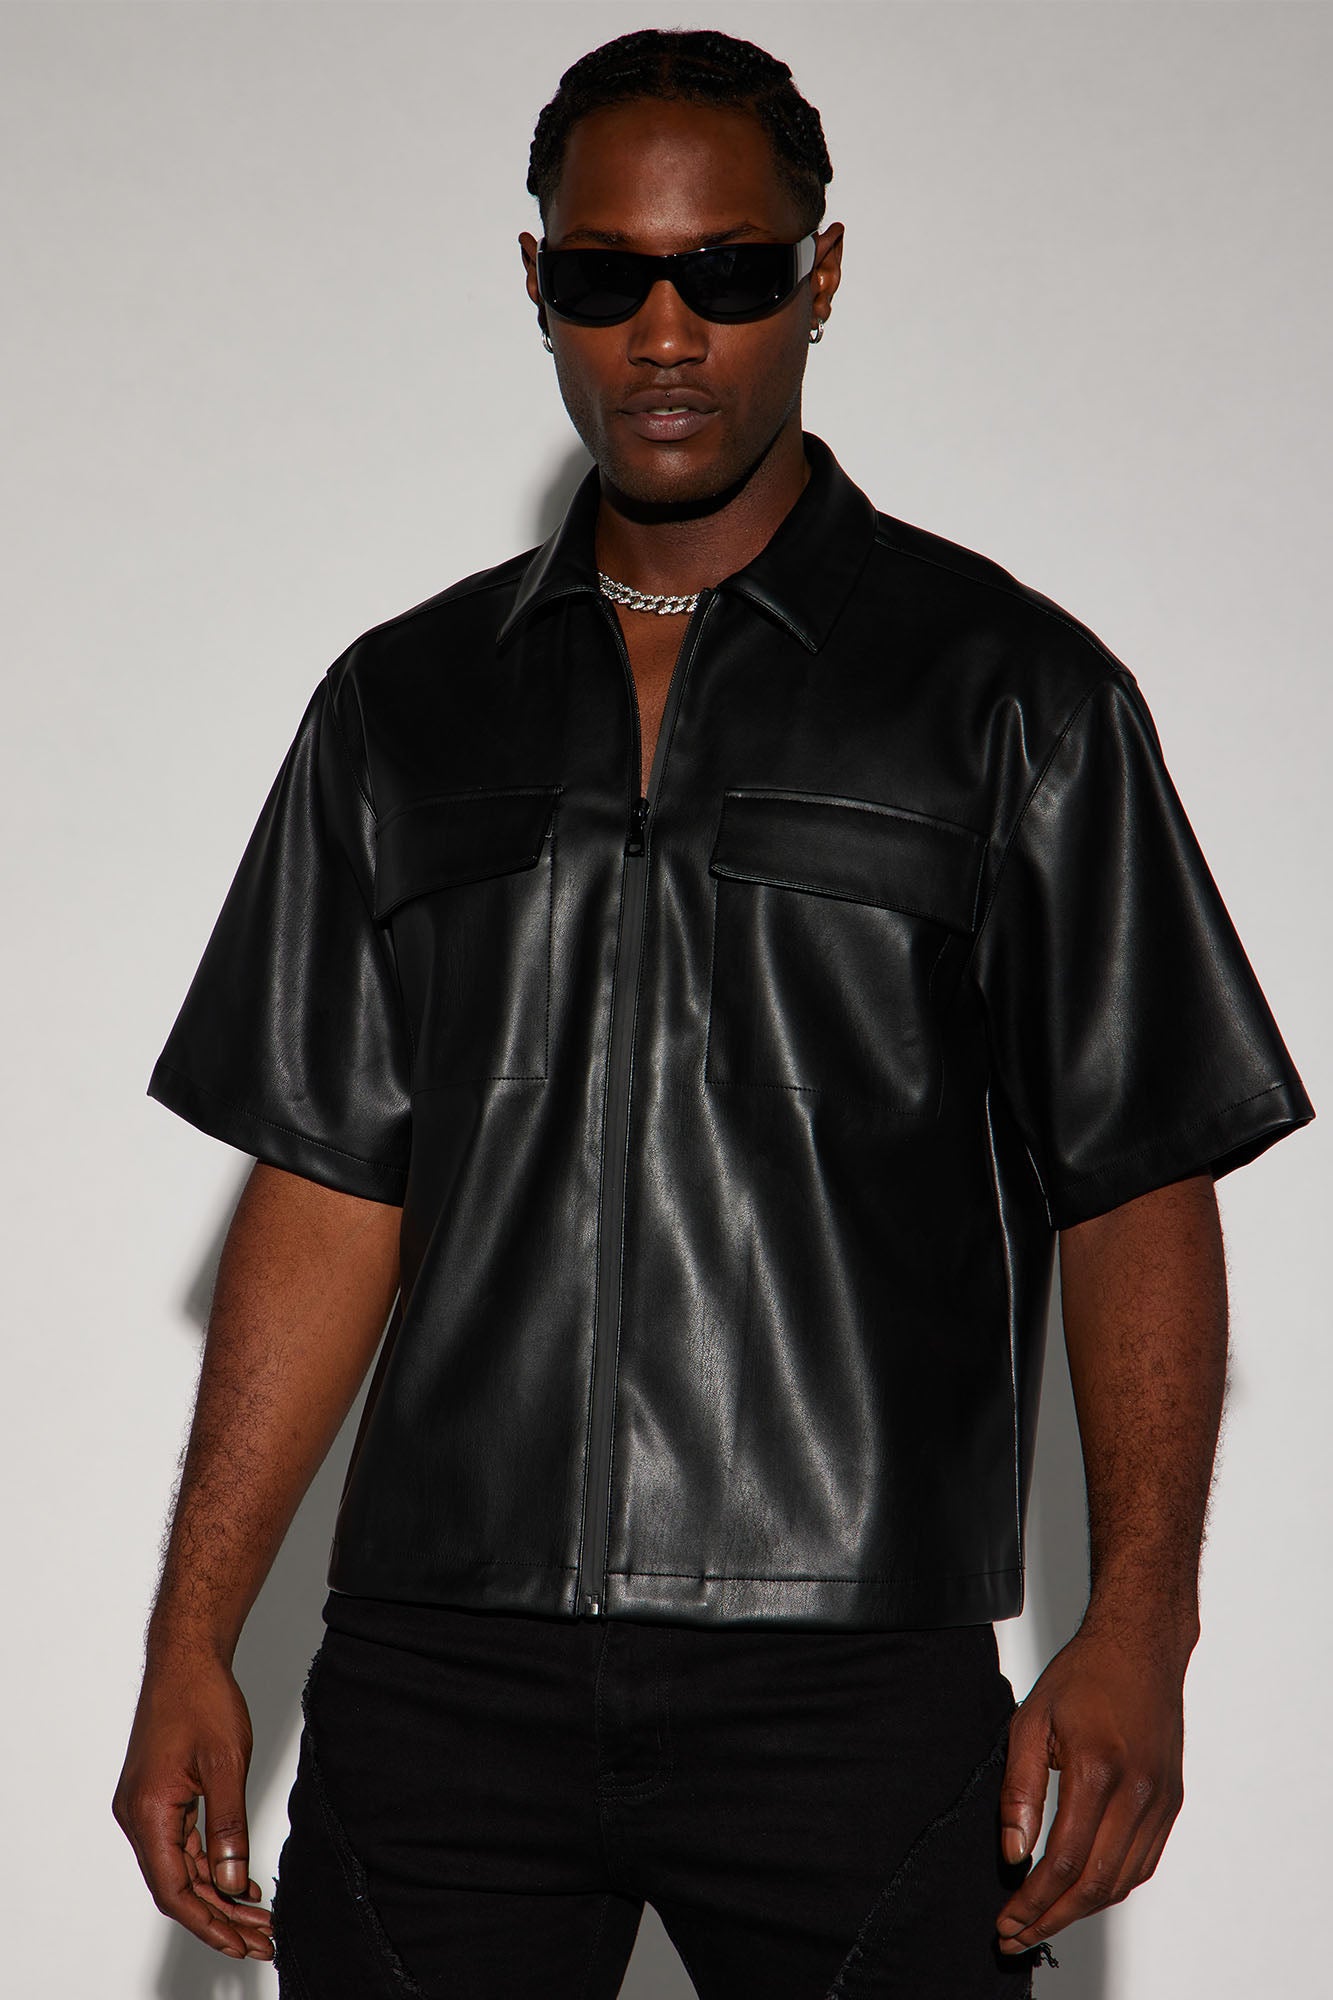 Men's Faux Leather Crossbody Bag in Black by Fashion Nova